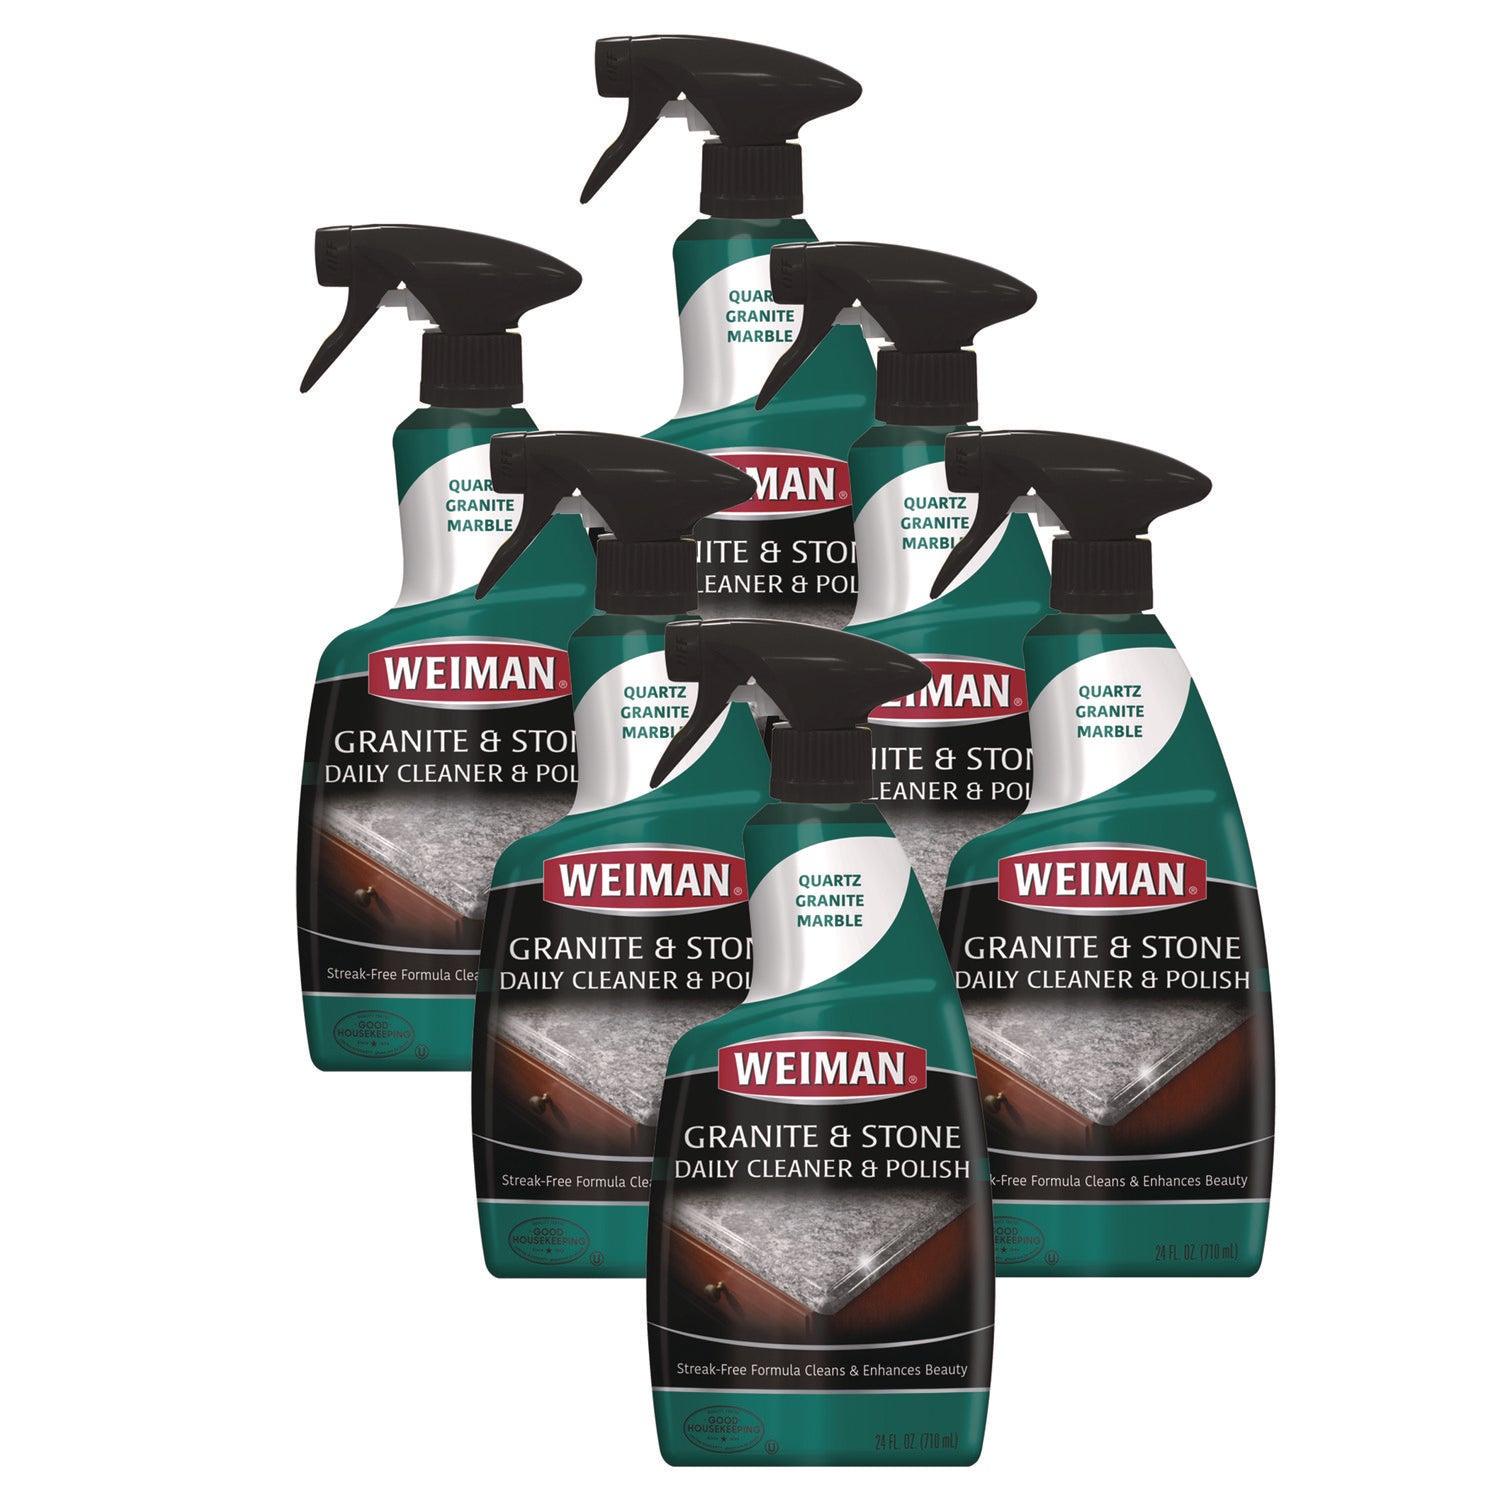 WEIMAN® Granite cleaner polish citrus scent, 24 oz Spray Bottle, 6/Carton